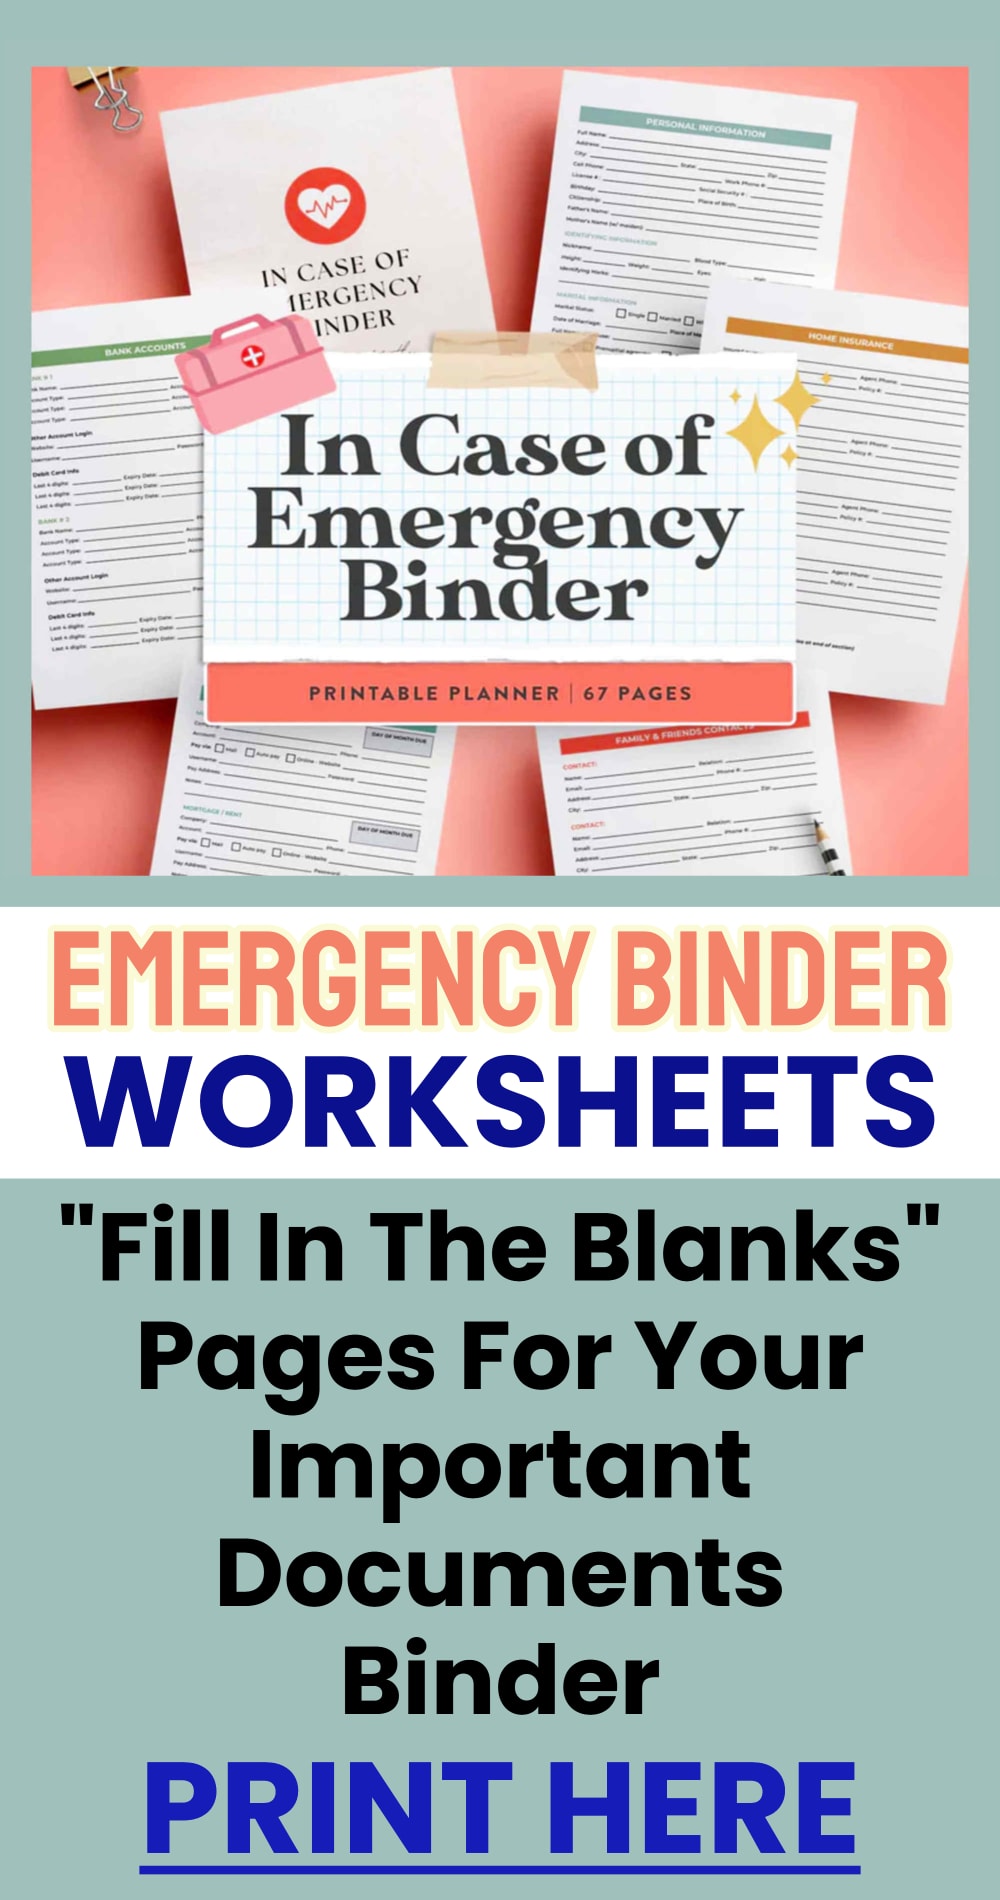 Emergency binder worksheets printables for my important documents binder